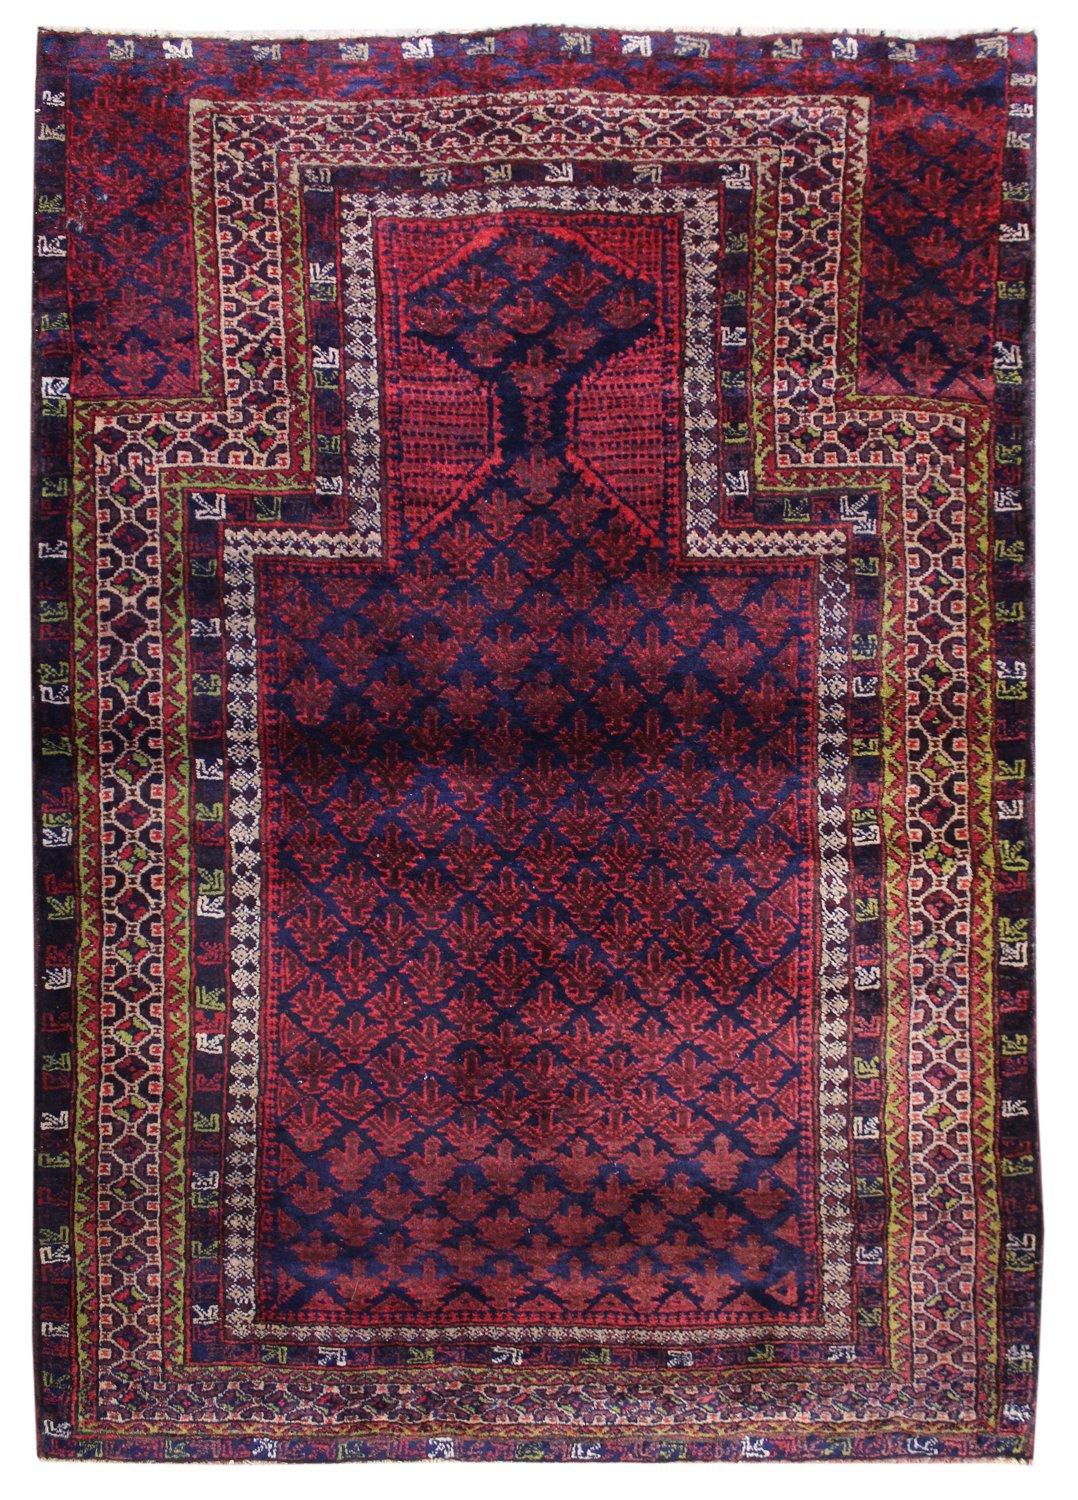 Vintage BaluchiTribal Rug